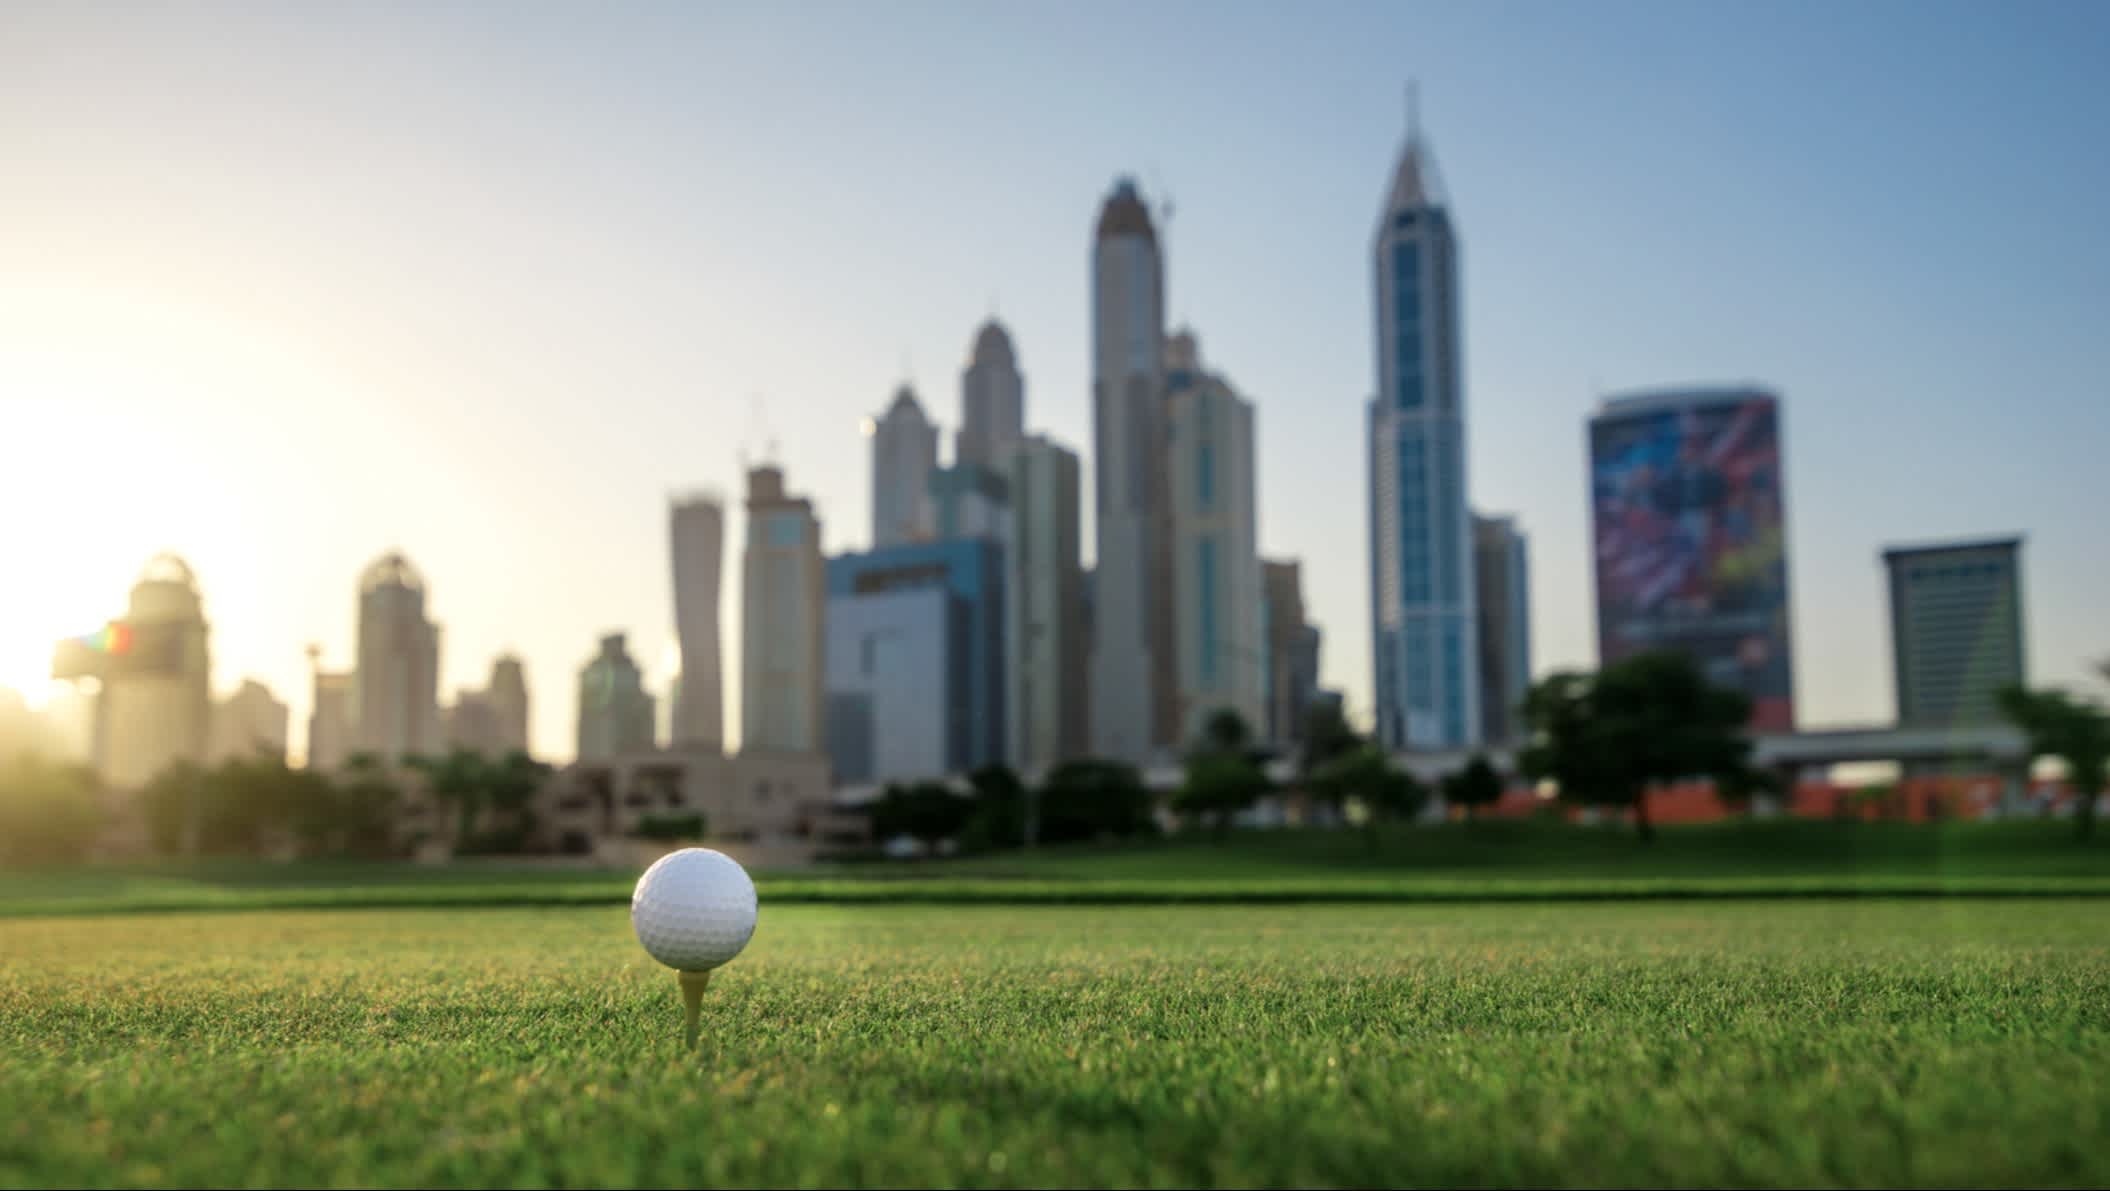 Blick auf dem Golfplatz in Dubai, VAE.

